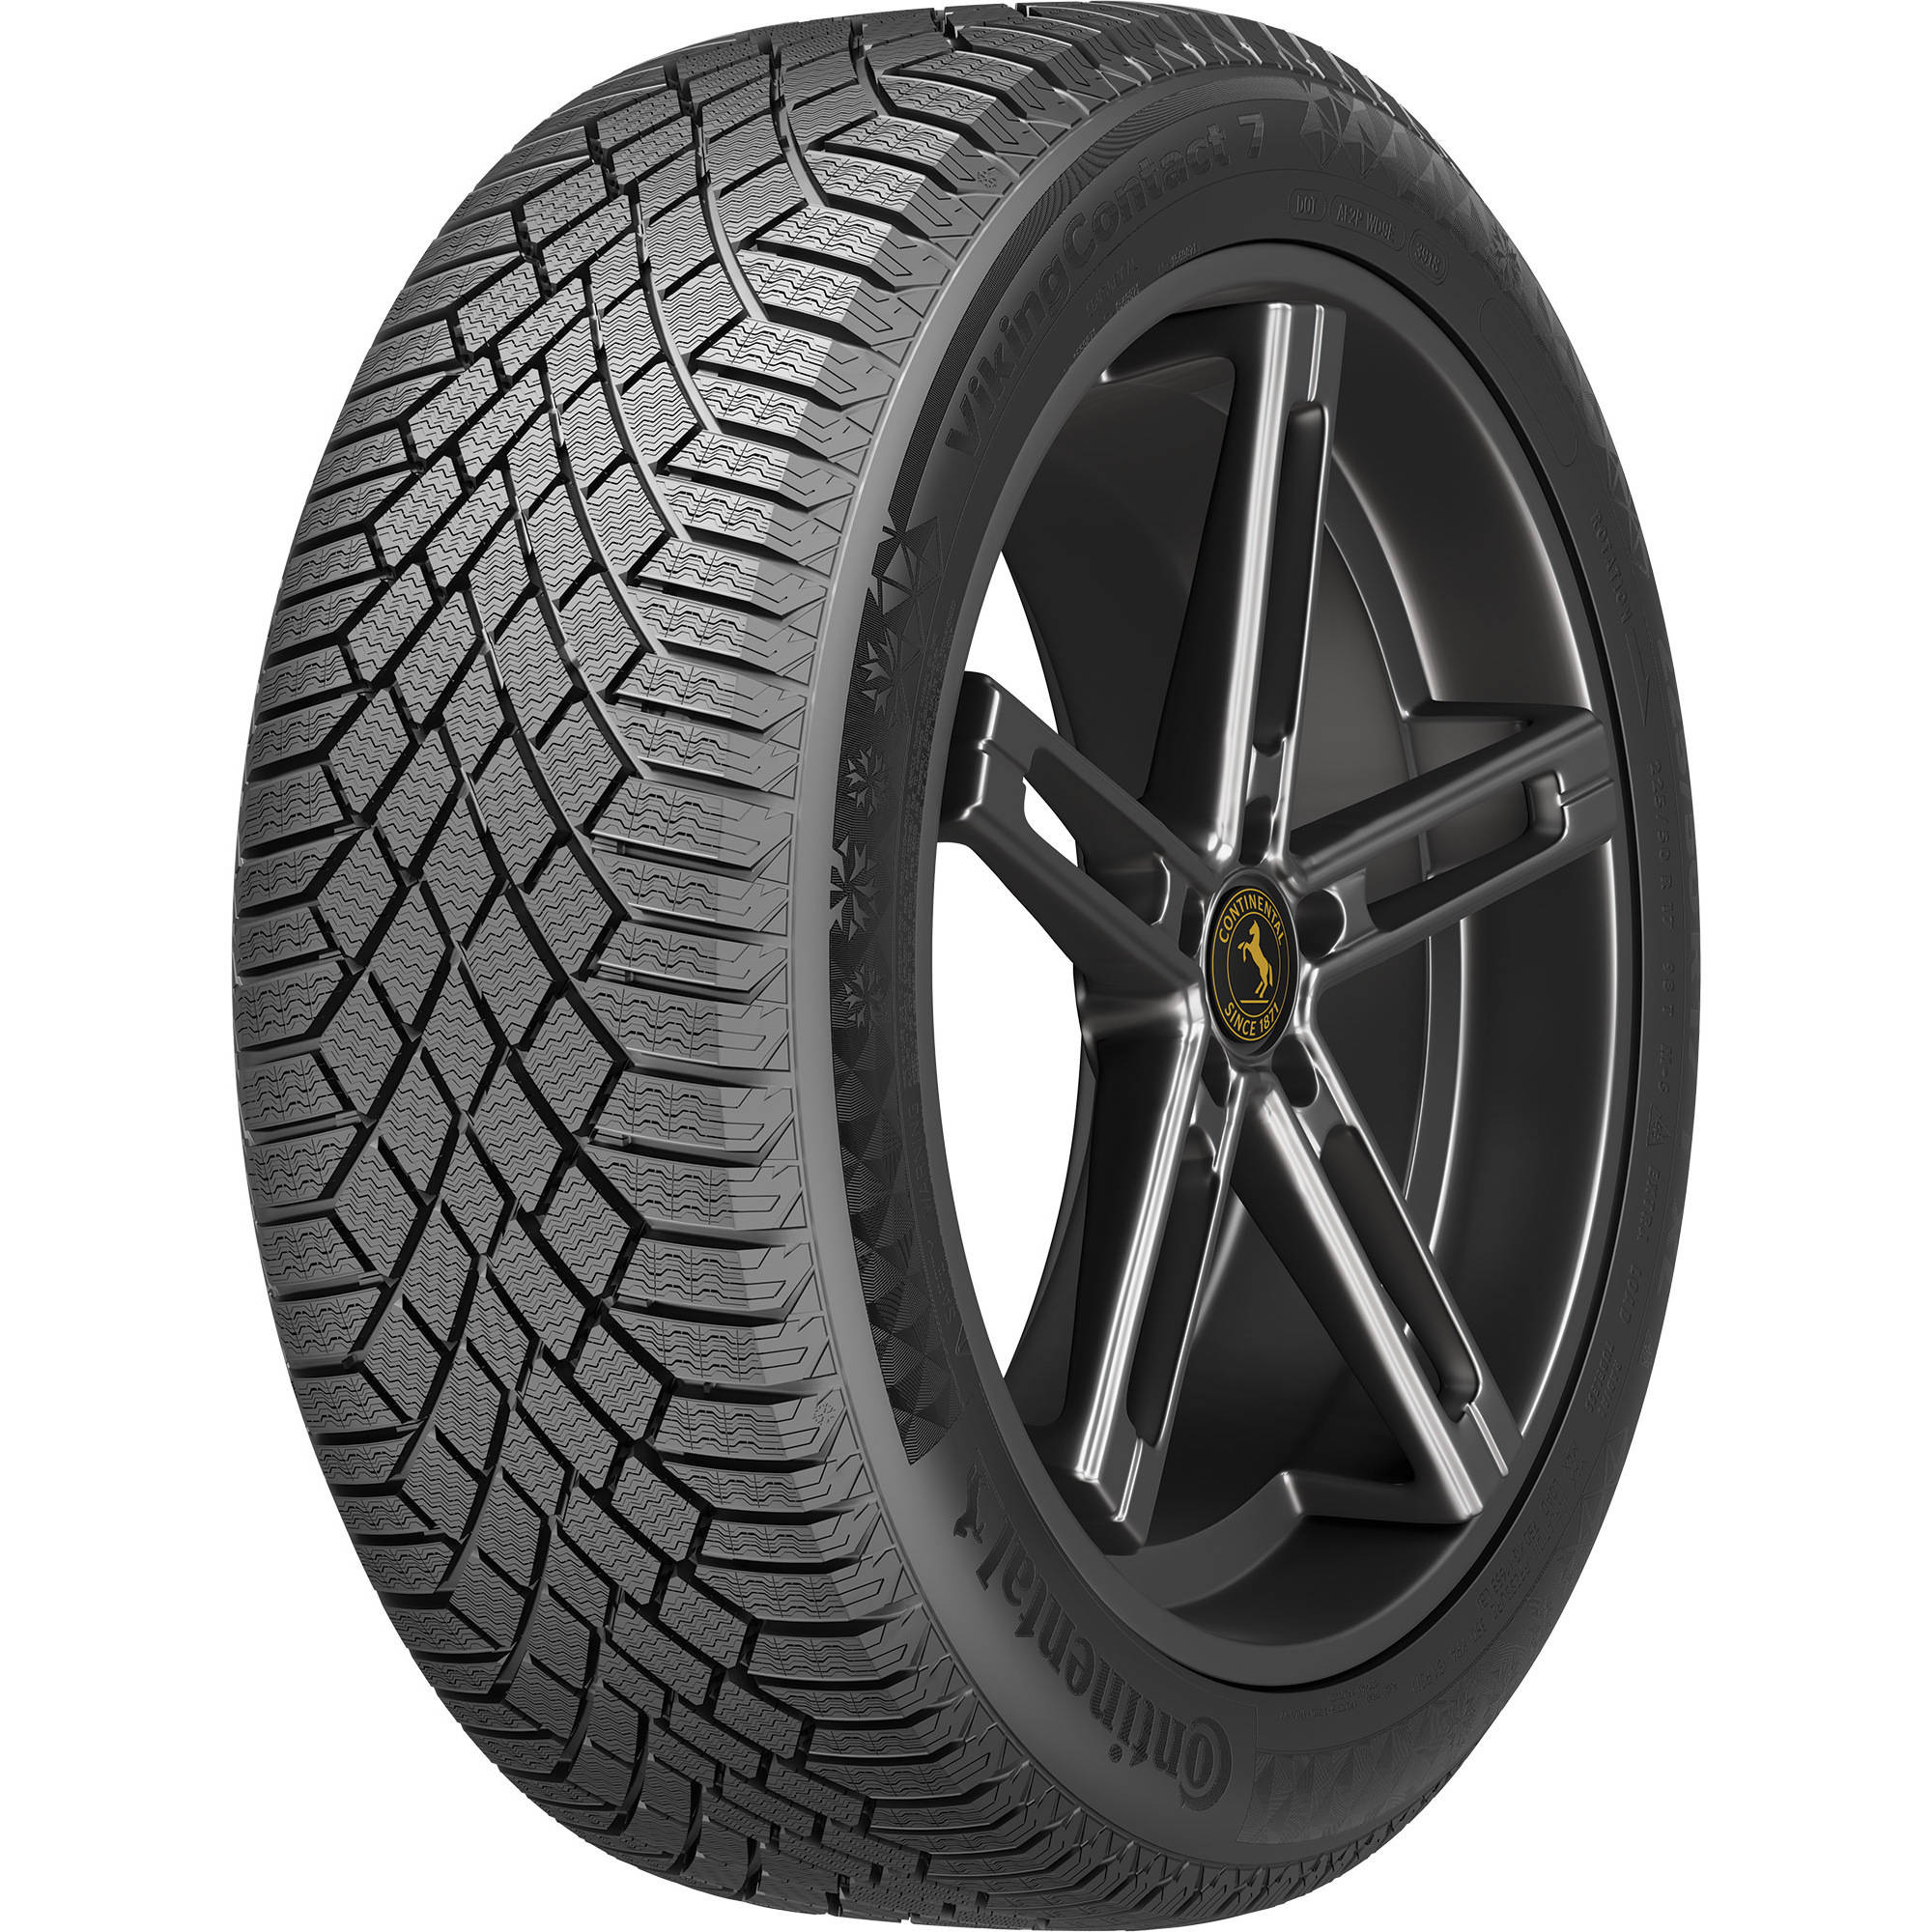 CONTINENTAL VIKING CONTACT 7 265/70R17XL (31.6X10.4R 17) Tires